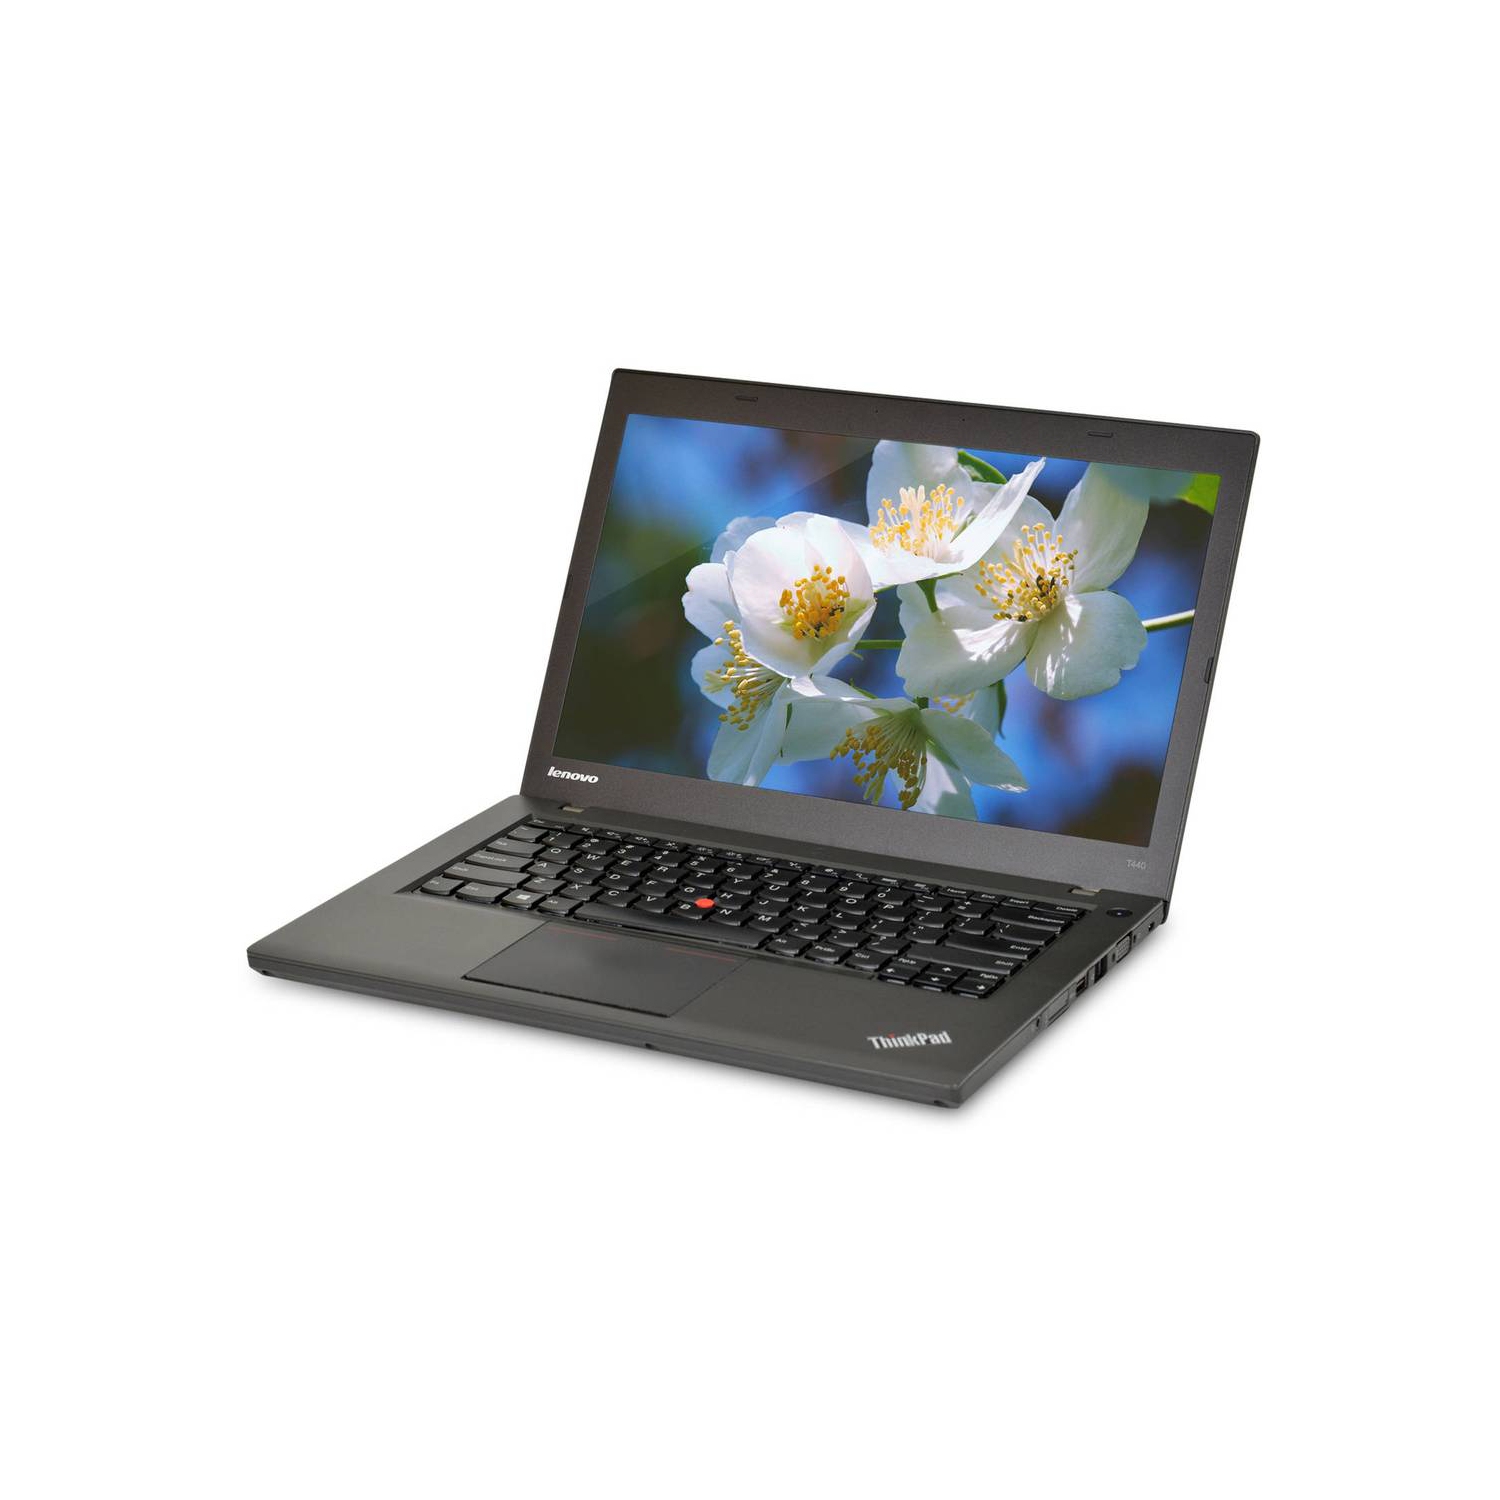 Refurbished (Good) - Lenovo Thinkpad T440 14" Ultrabook - Intel Core i5-4300u 1.9GHz, 8GB RAM, 500GB HDD, Webcam, Windows 10 Pro